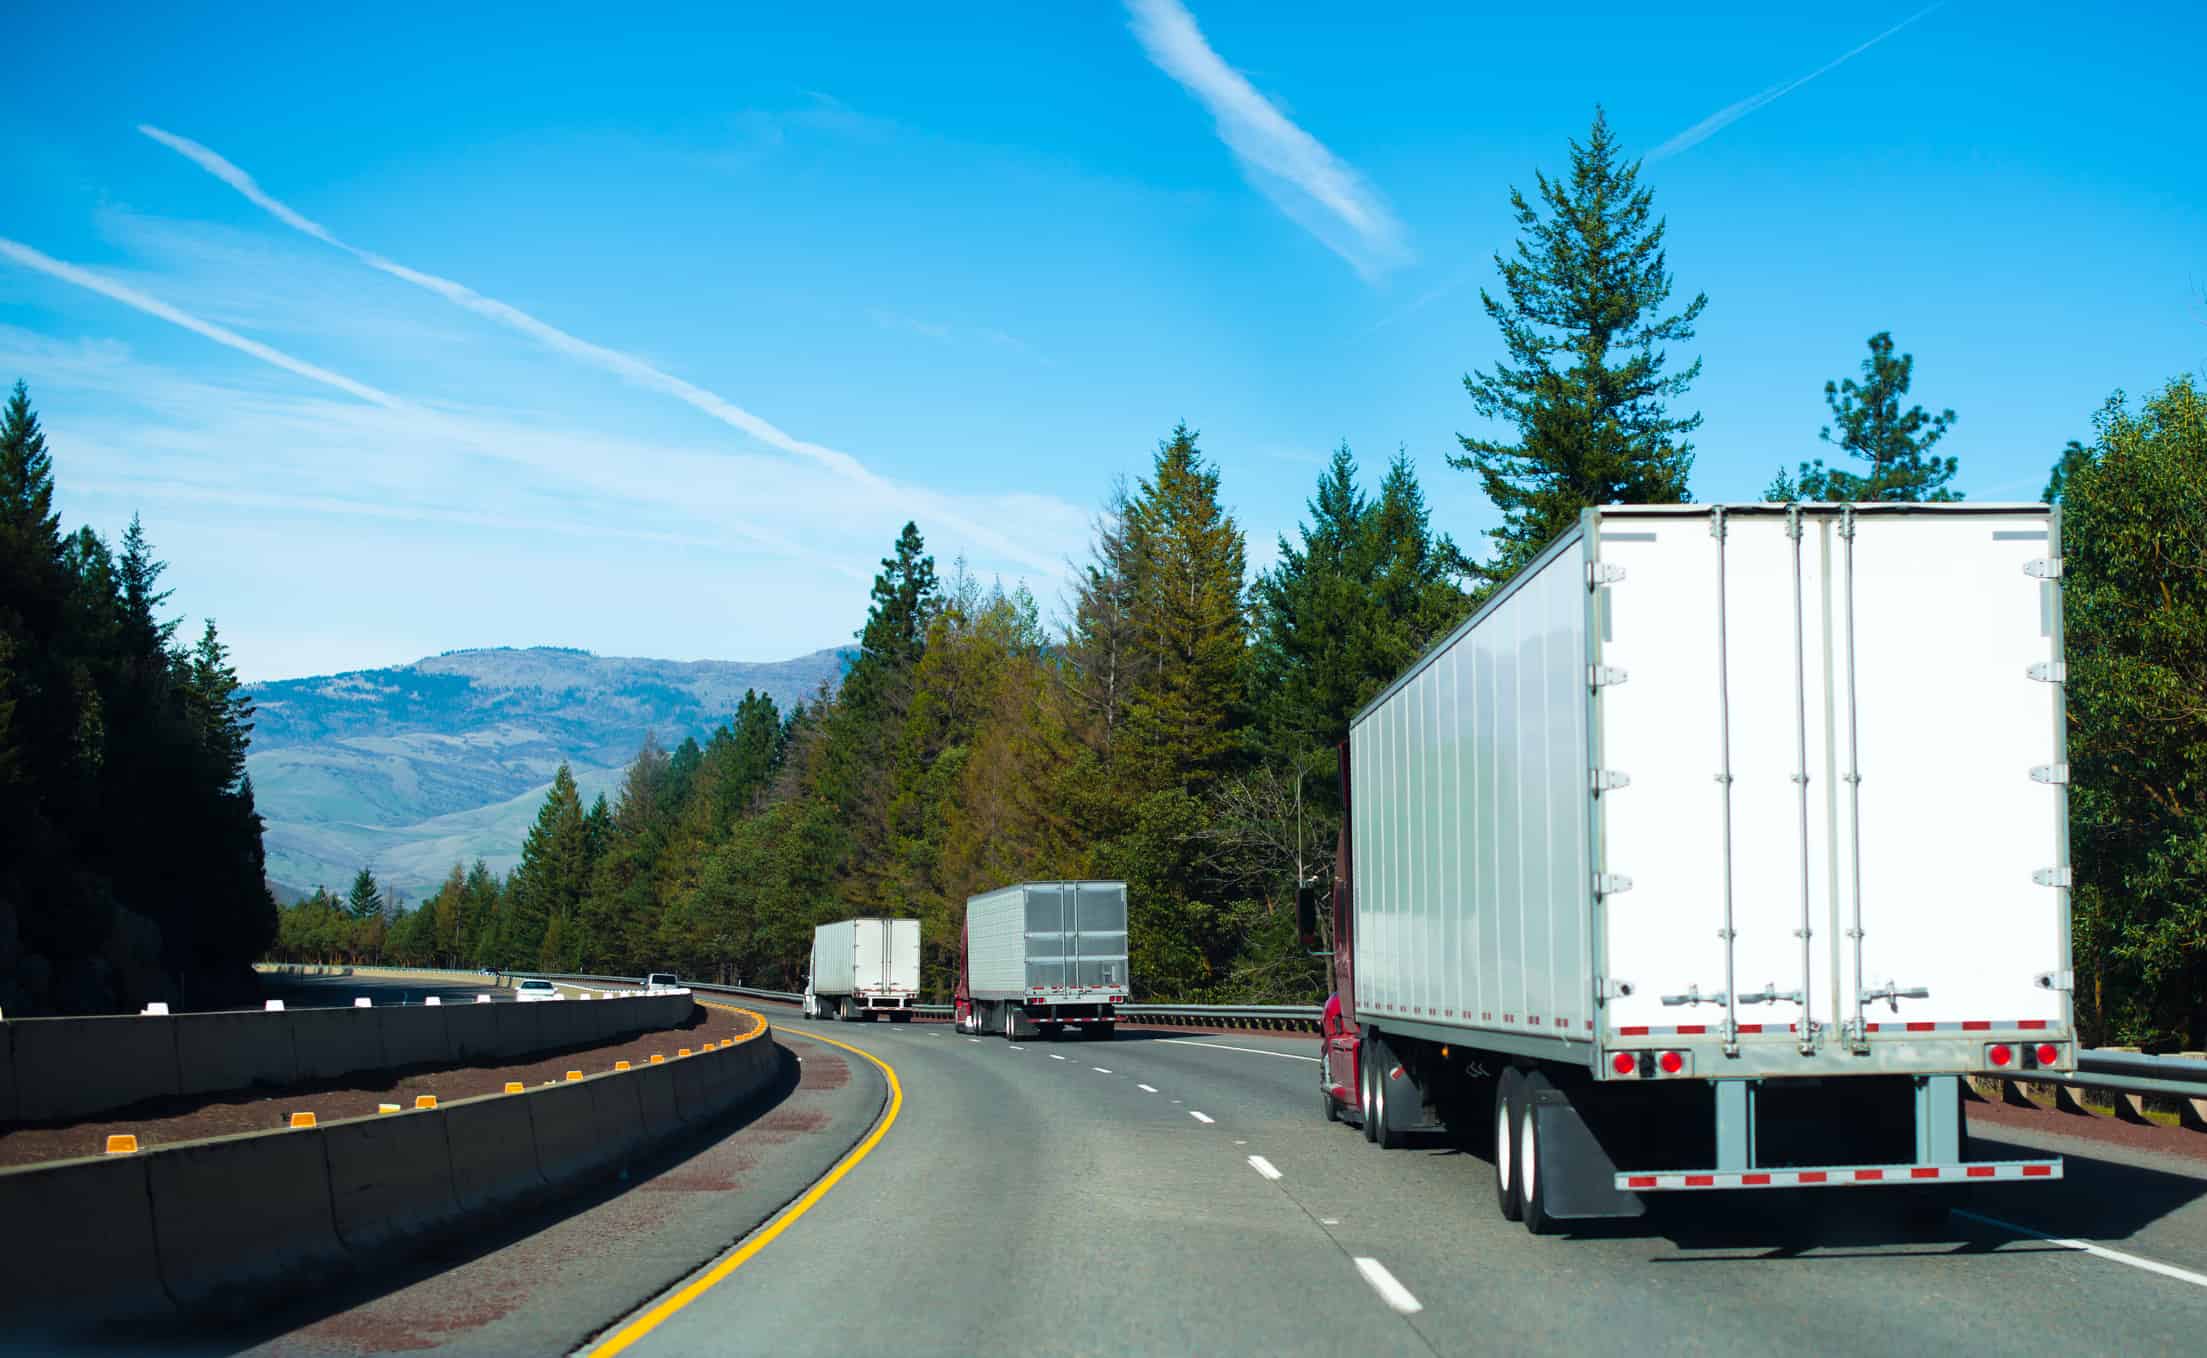 Convoy Semi trucks dry van trailers winding highway